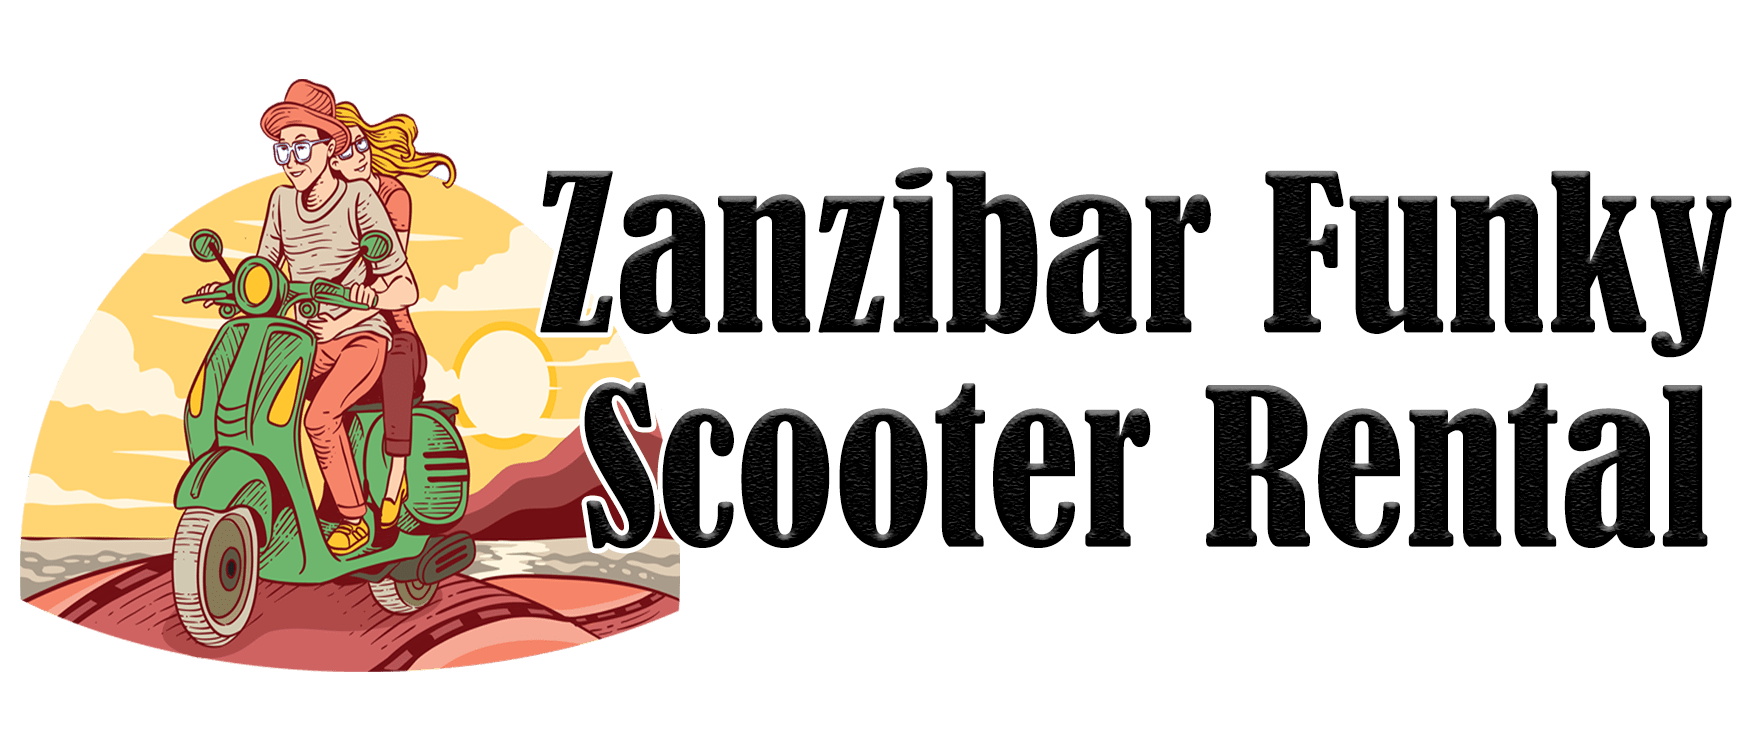 Zanzibar Funky Scooter Rental